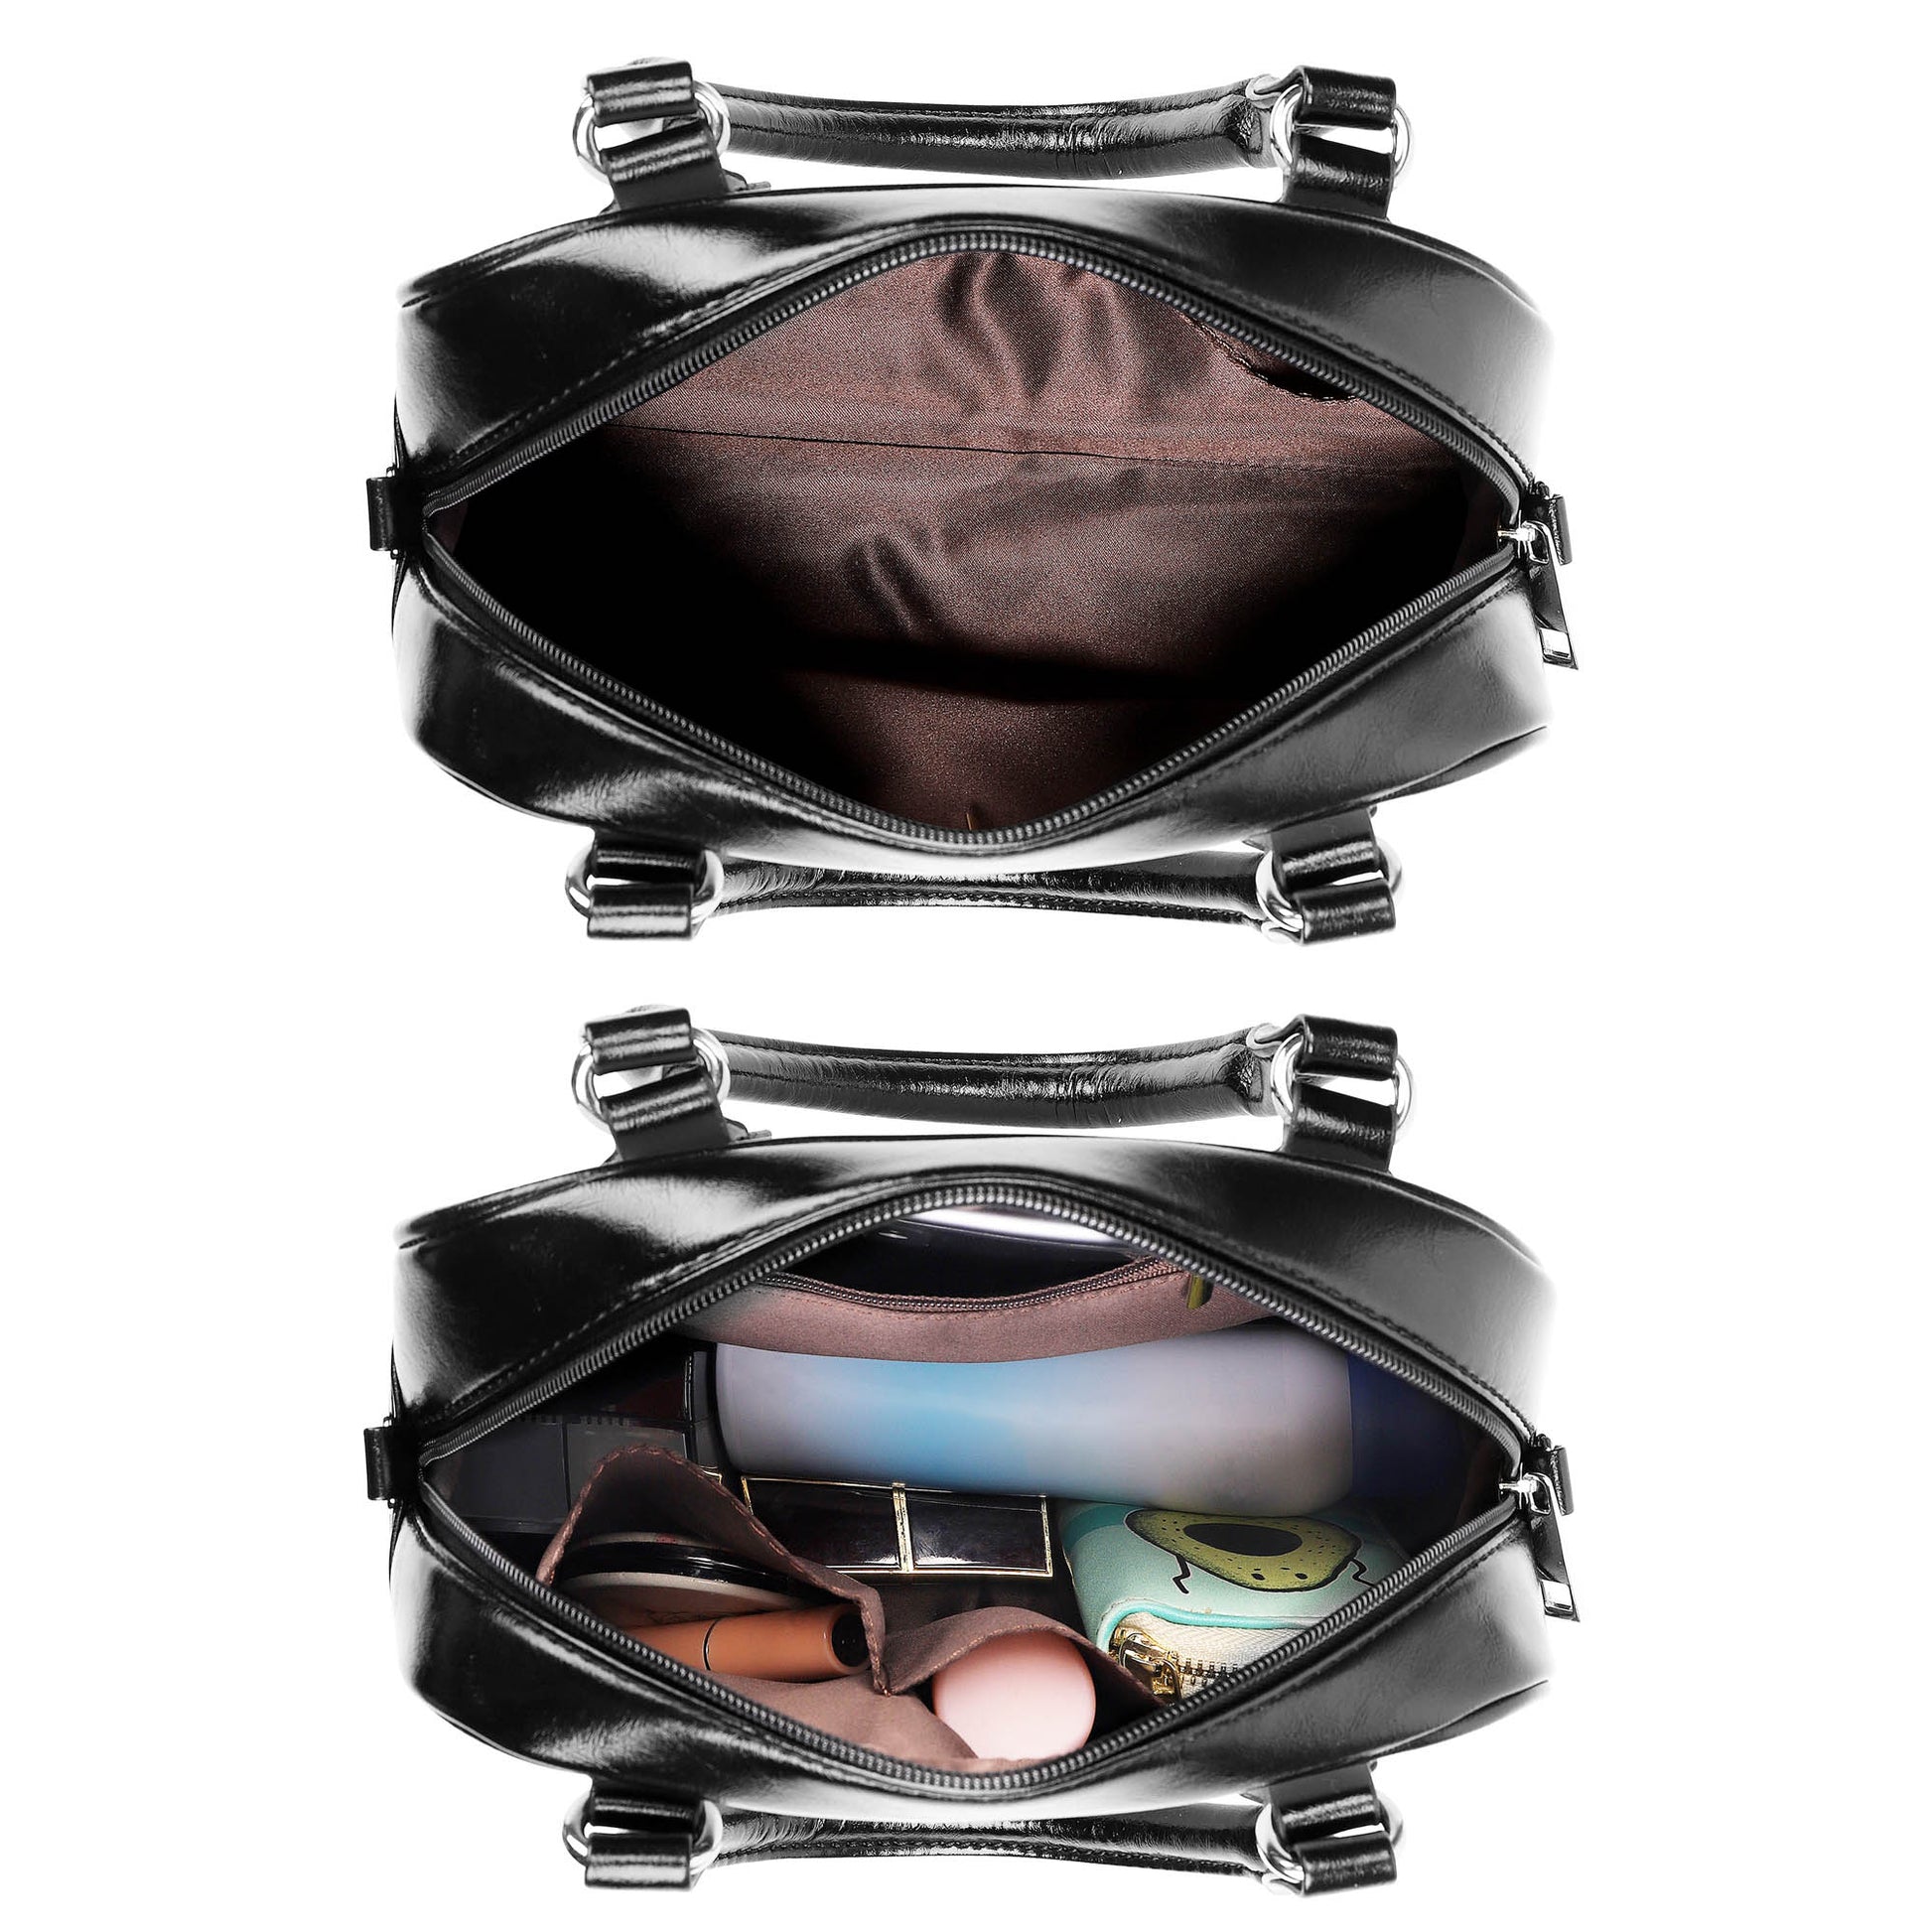 Wilson Tartan Shoulder Handbags with Family Crest - Tartanvibesclothing